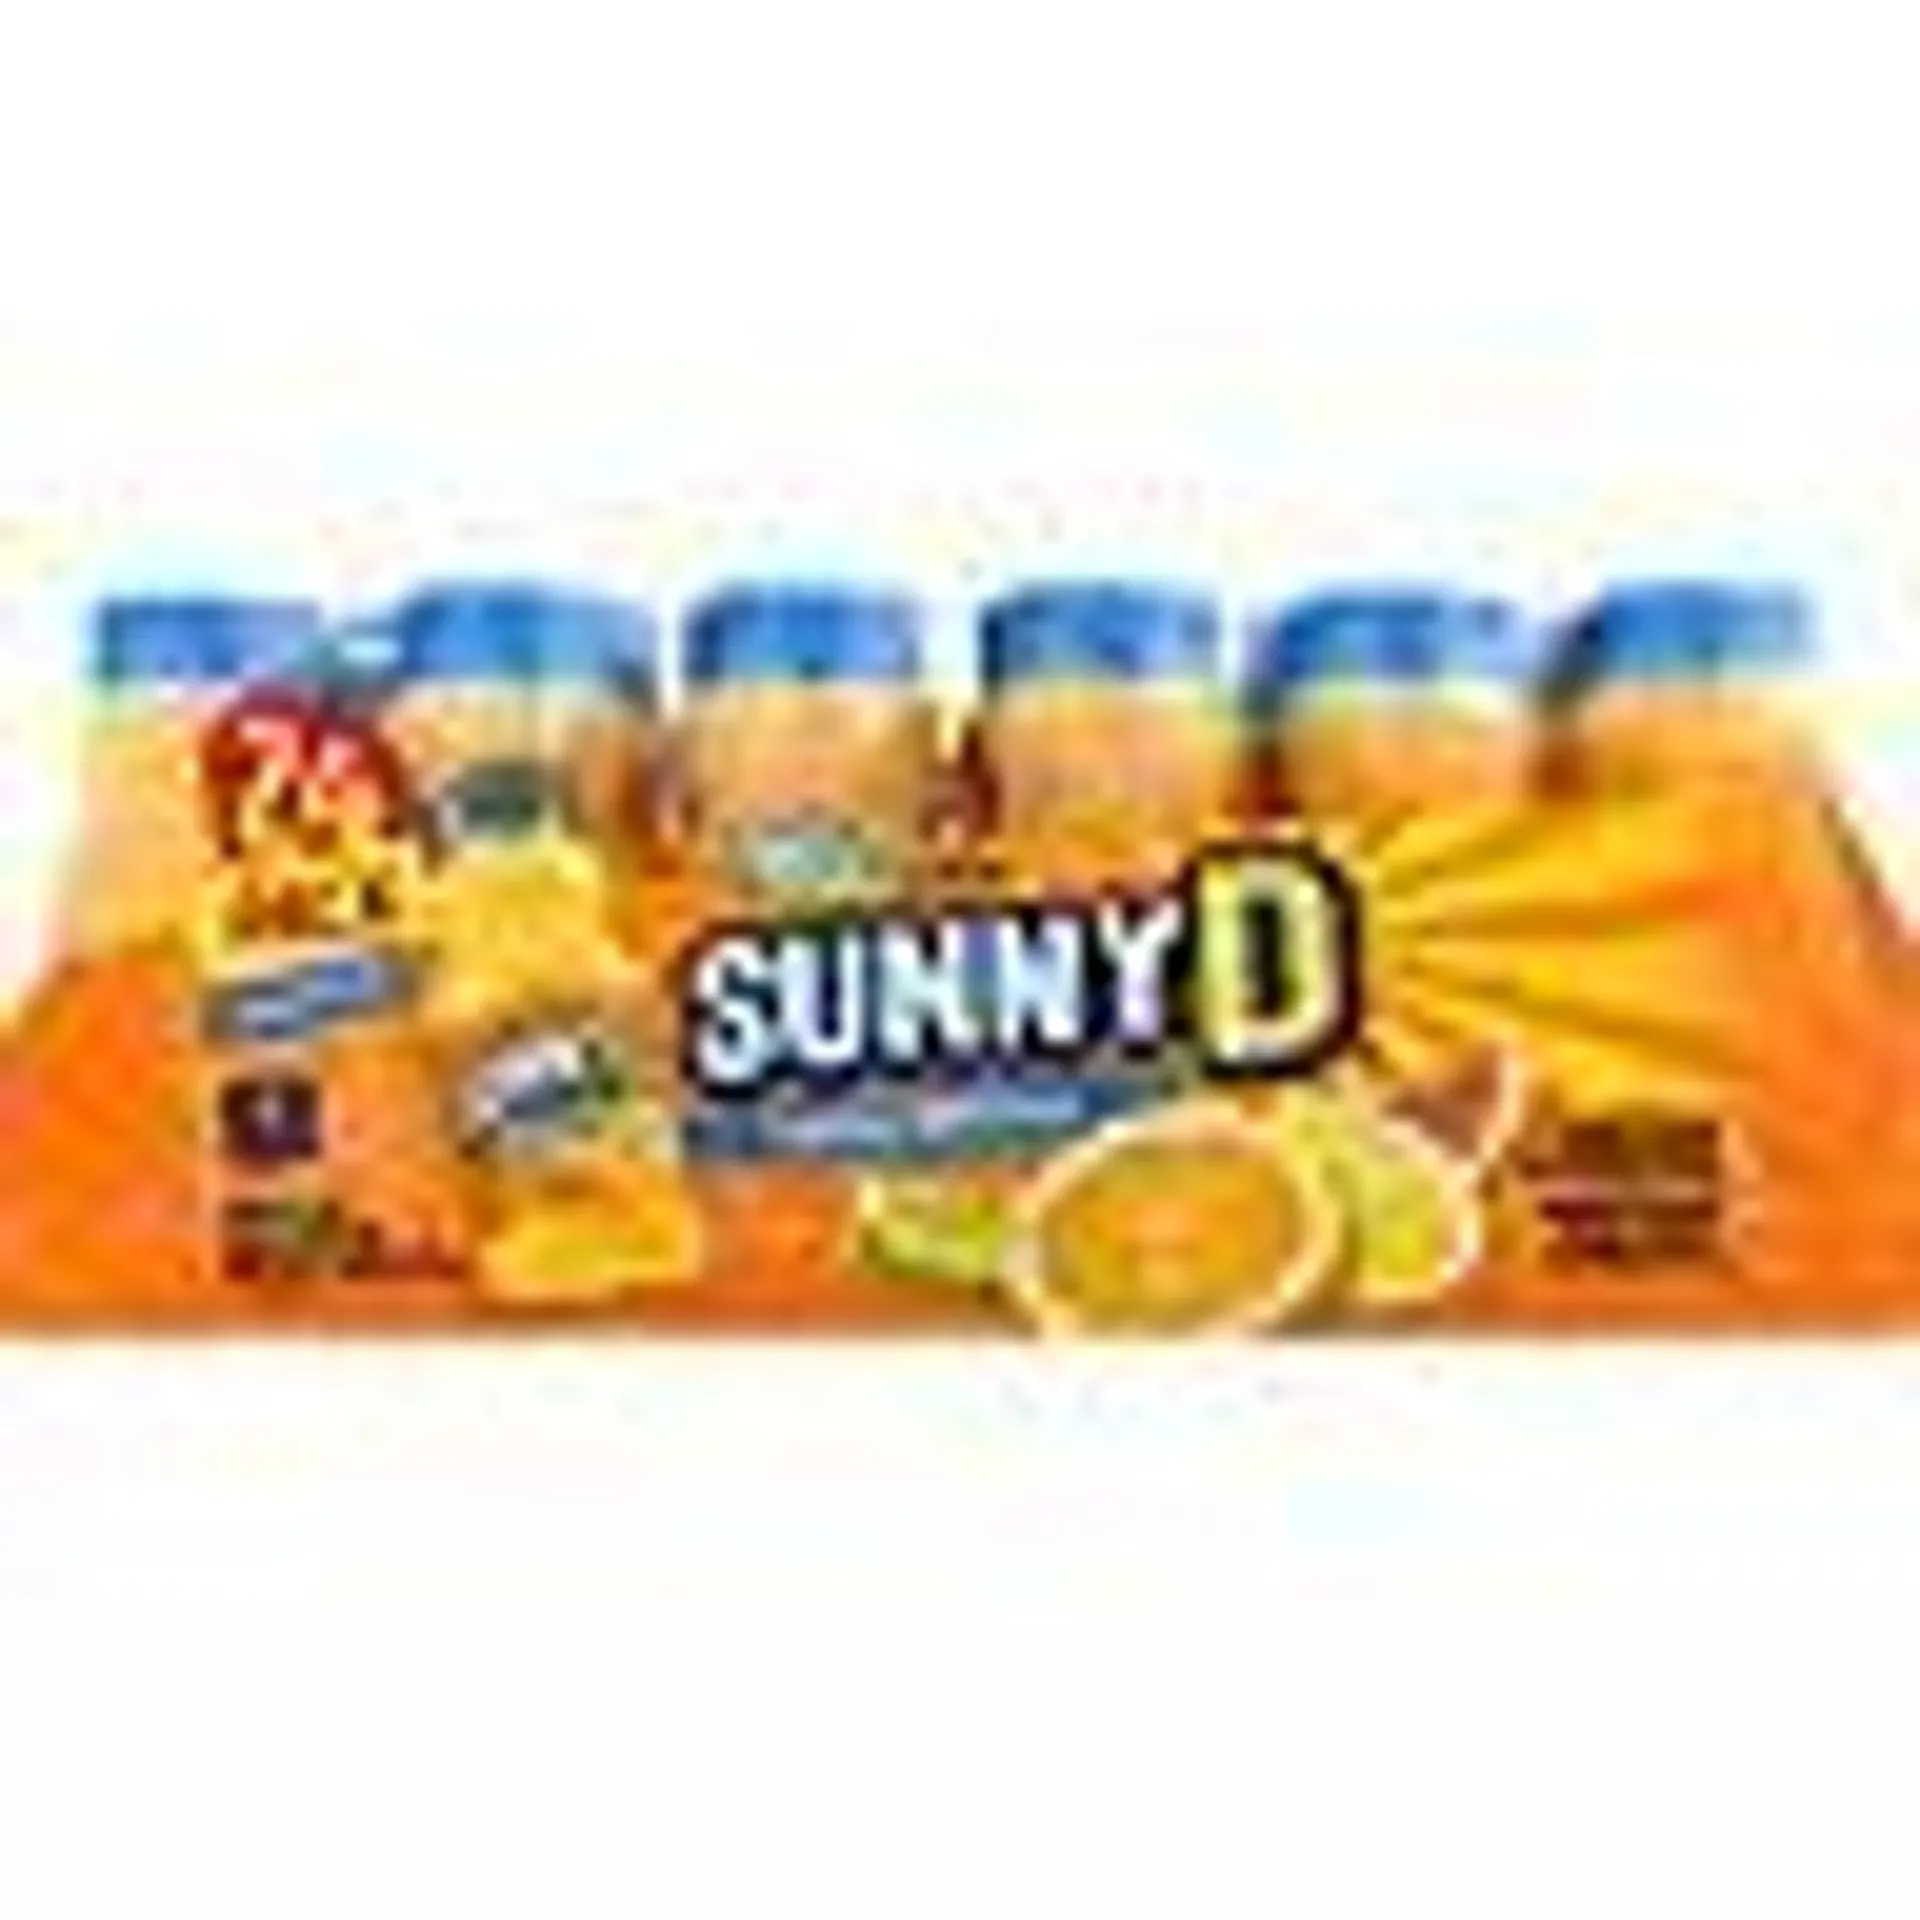 SunnyD Tangy Original Orange Flavored Citrus Punch, 6.75 fl. oz., 24 pk.